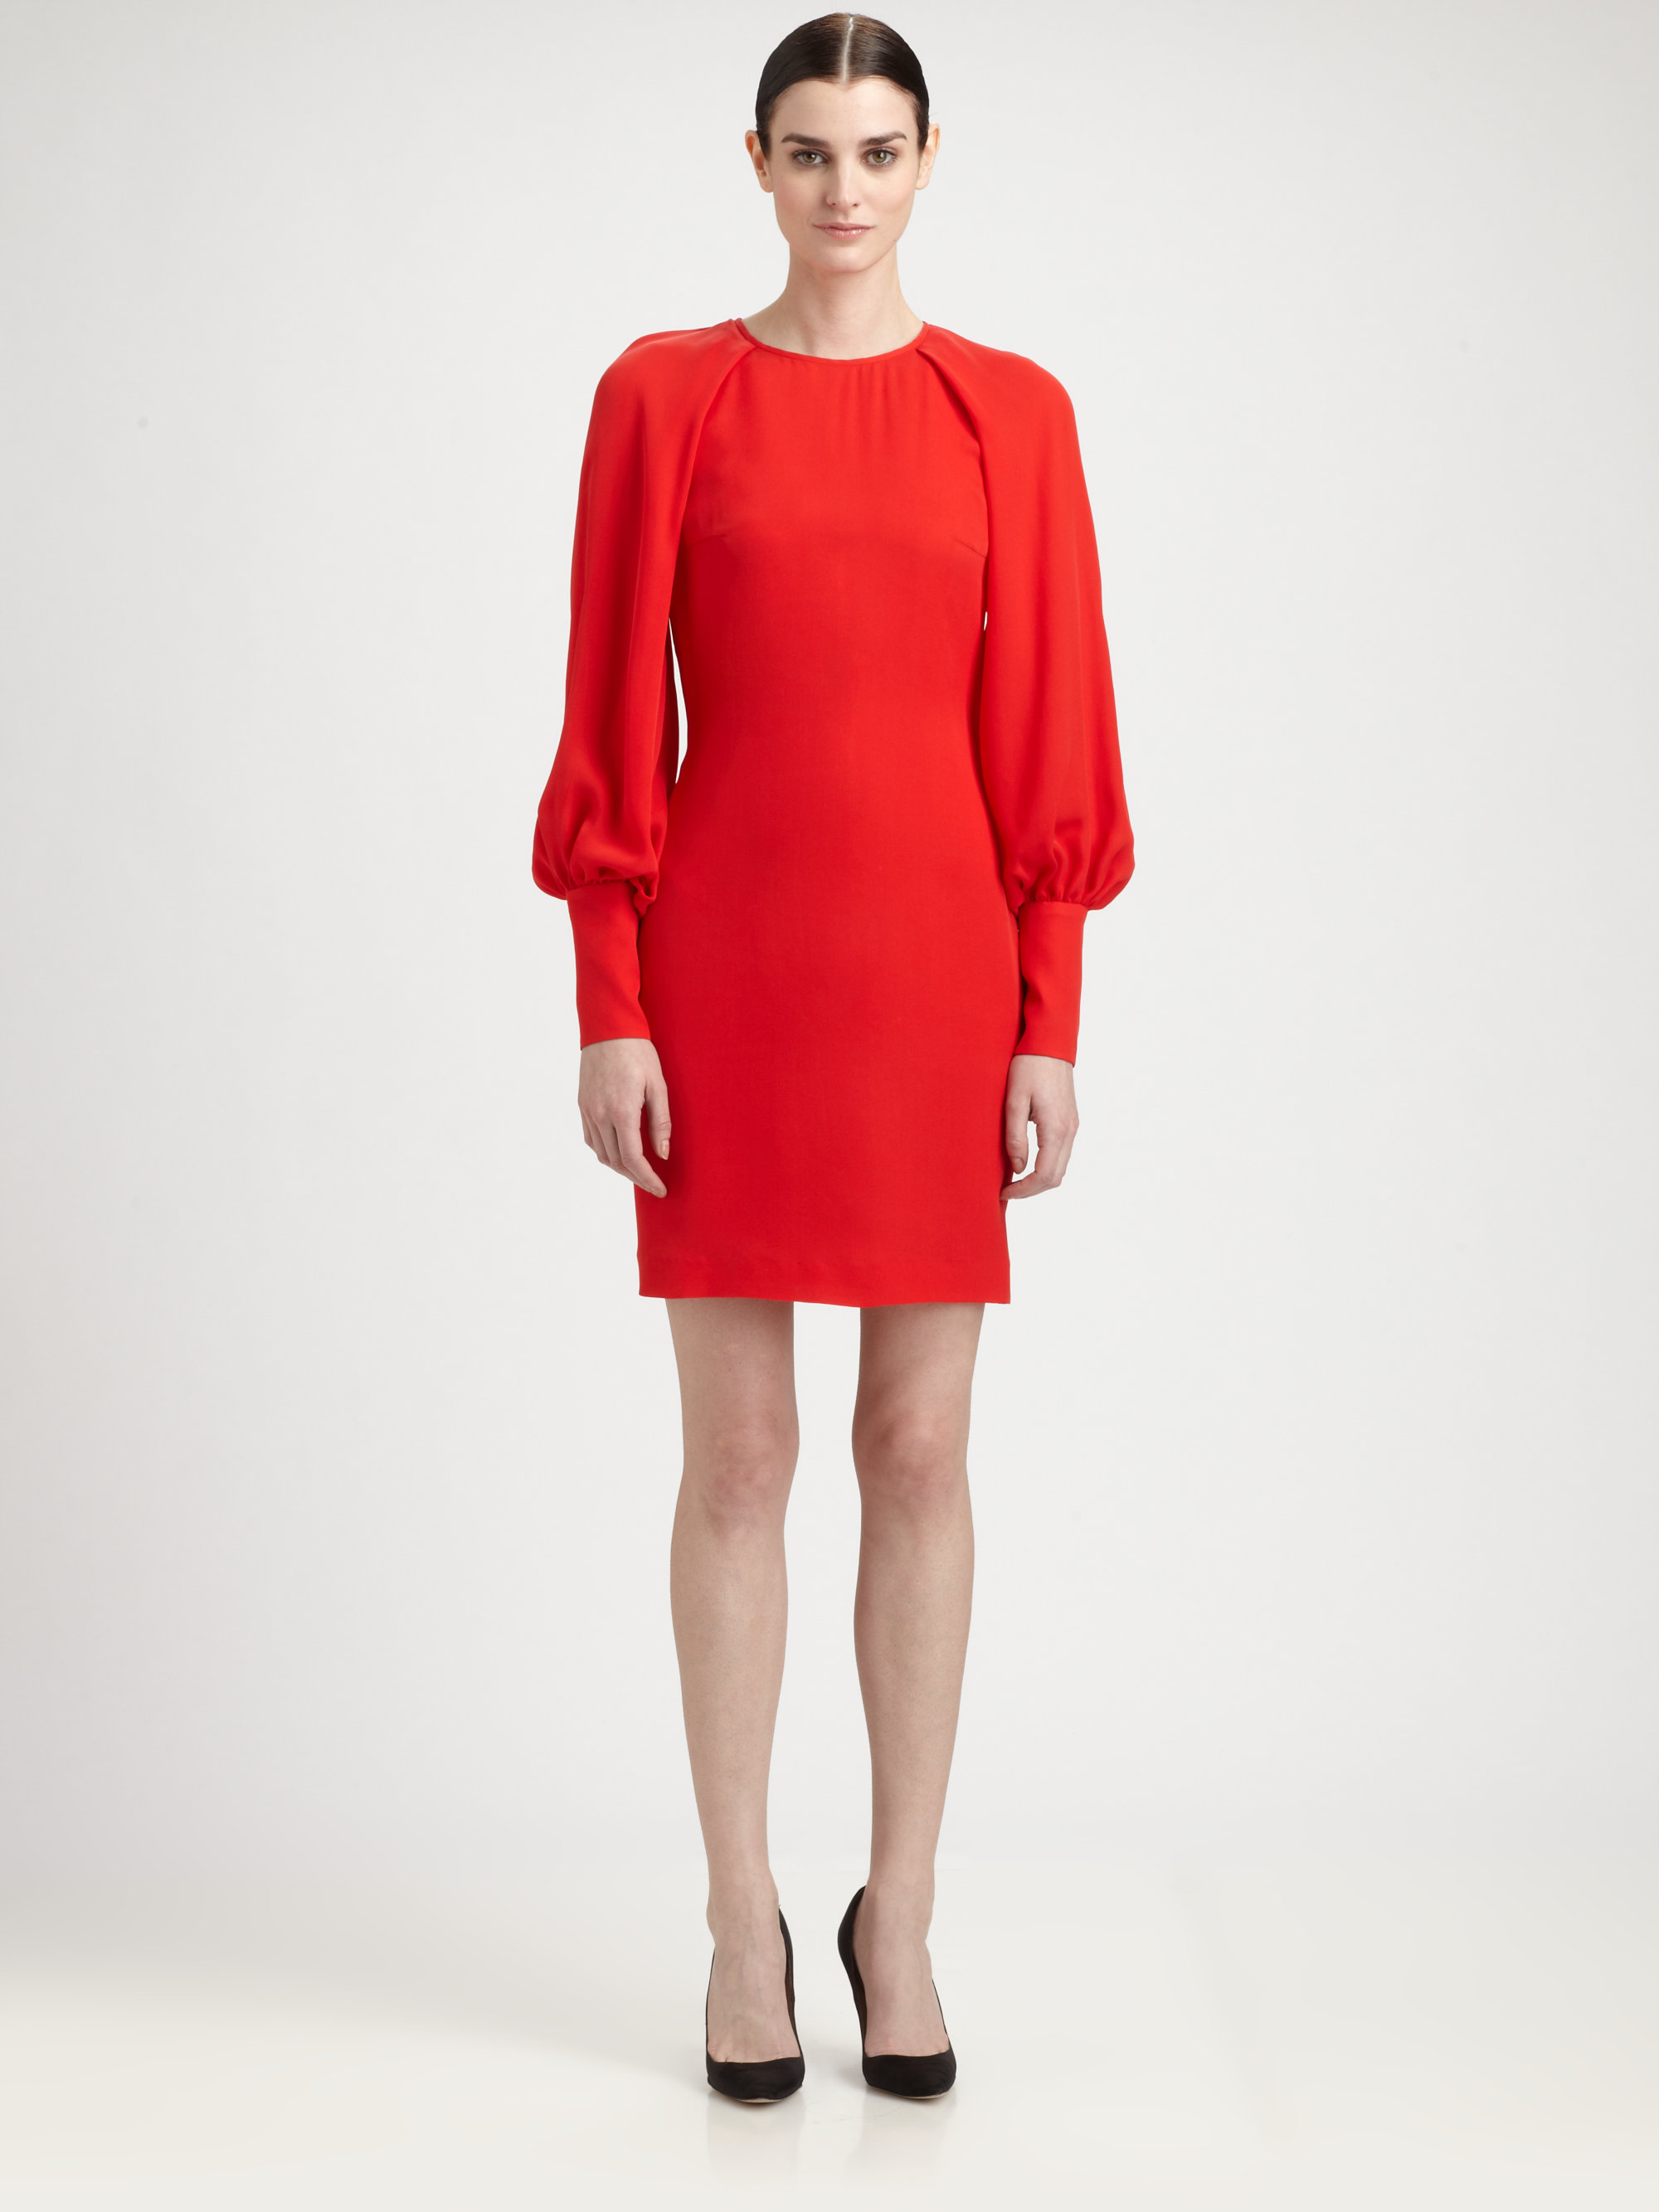 Lyst - Martin Grant Longsleeve Silk Dress in Red